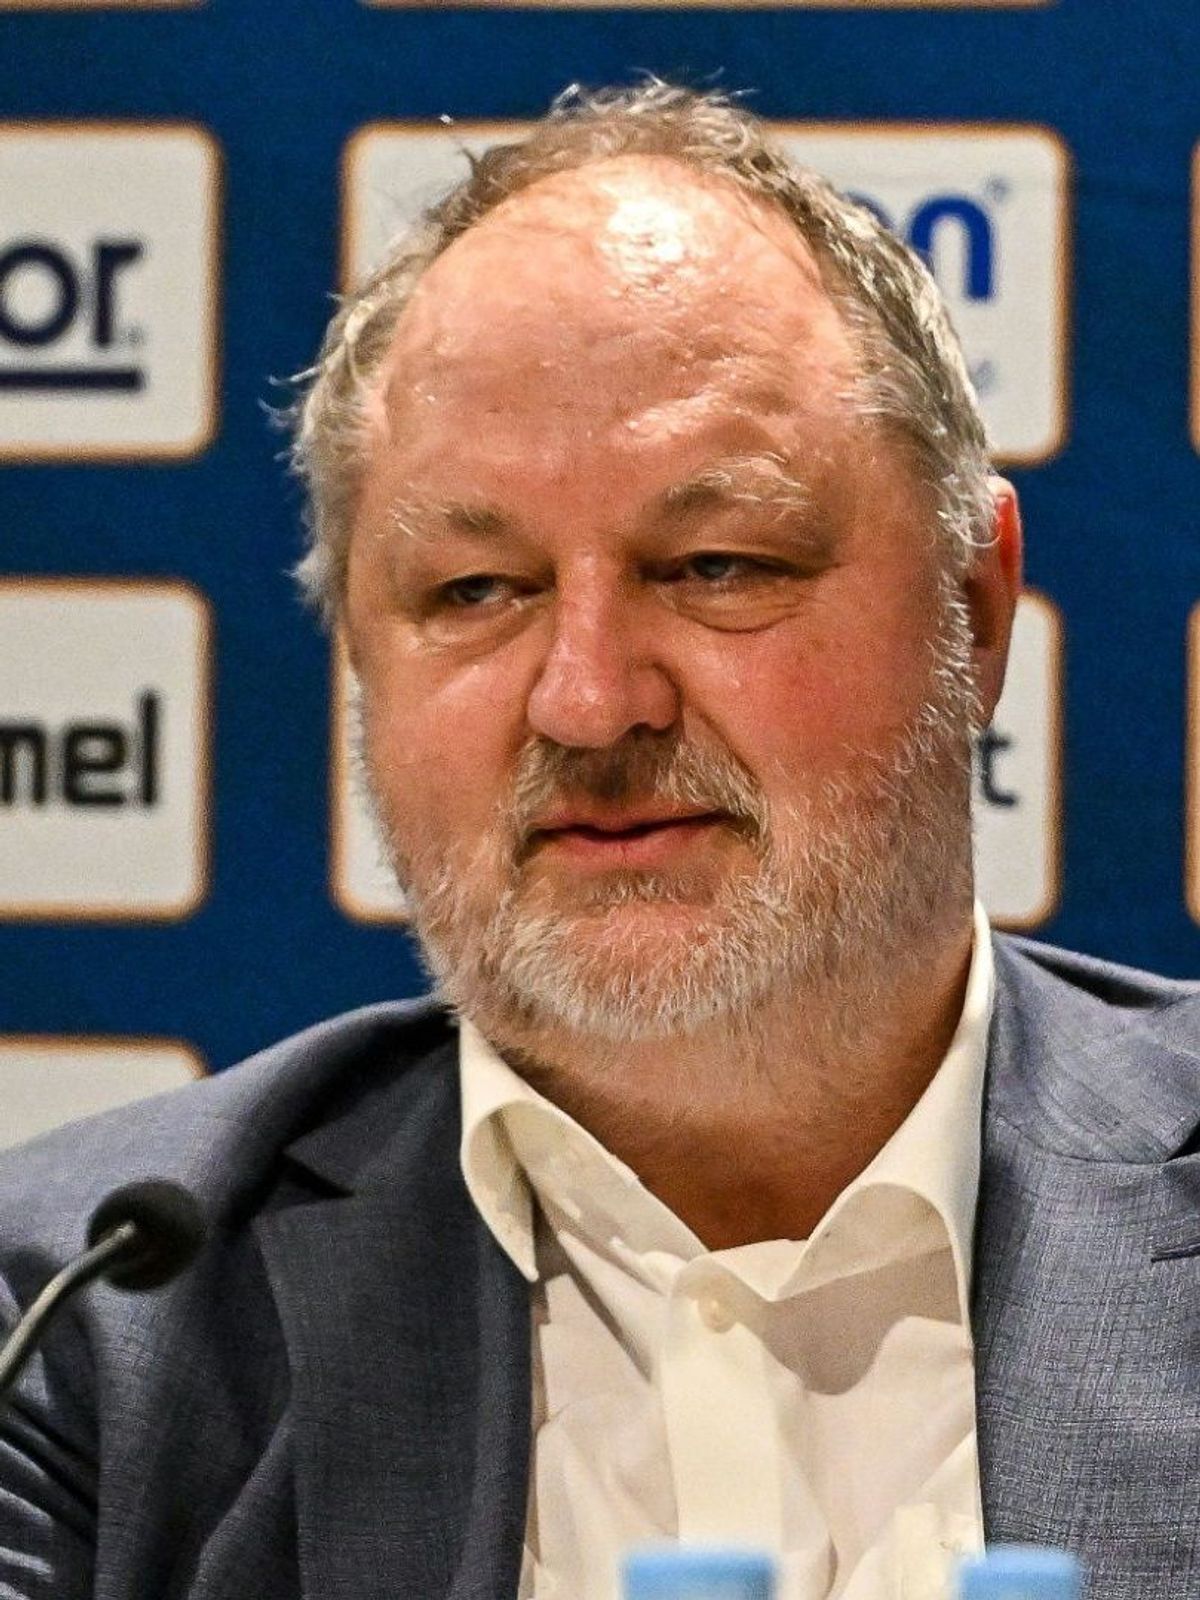 DHB-Präsident Andreas Michelmann